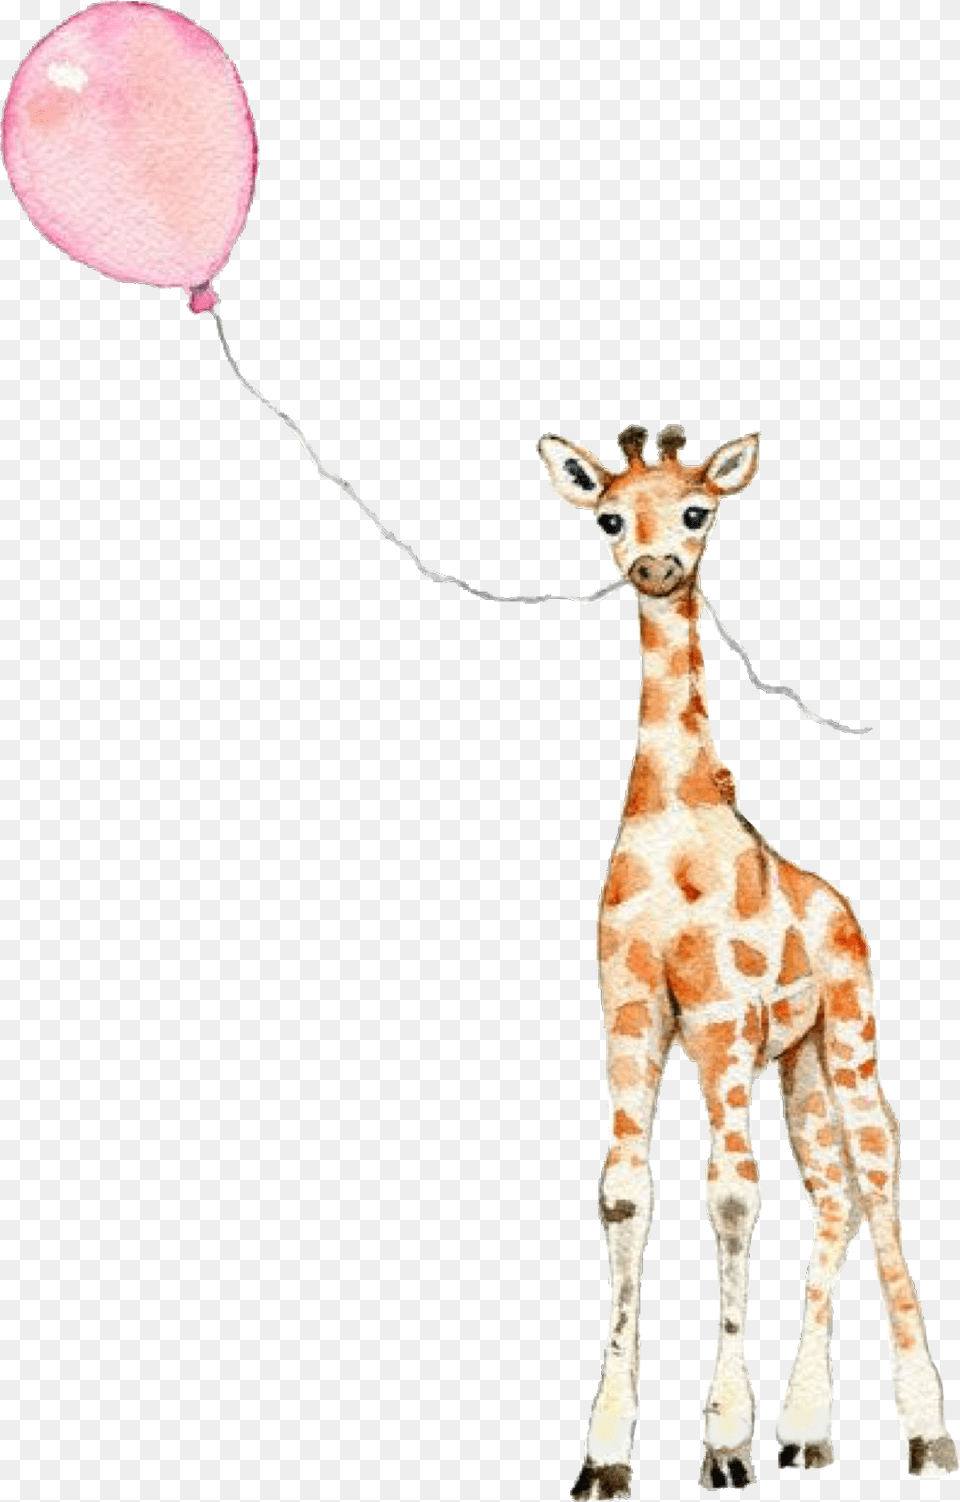 Cute Adorable Giraffe Balloon Scgiraffe Giraffe With Balloon Painting, Animal, Mammal, Wildlife Png